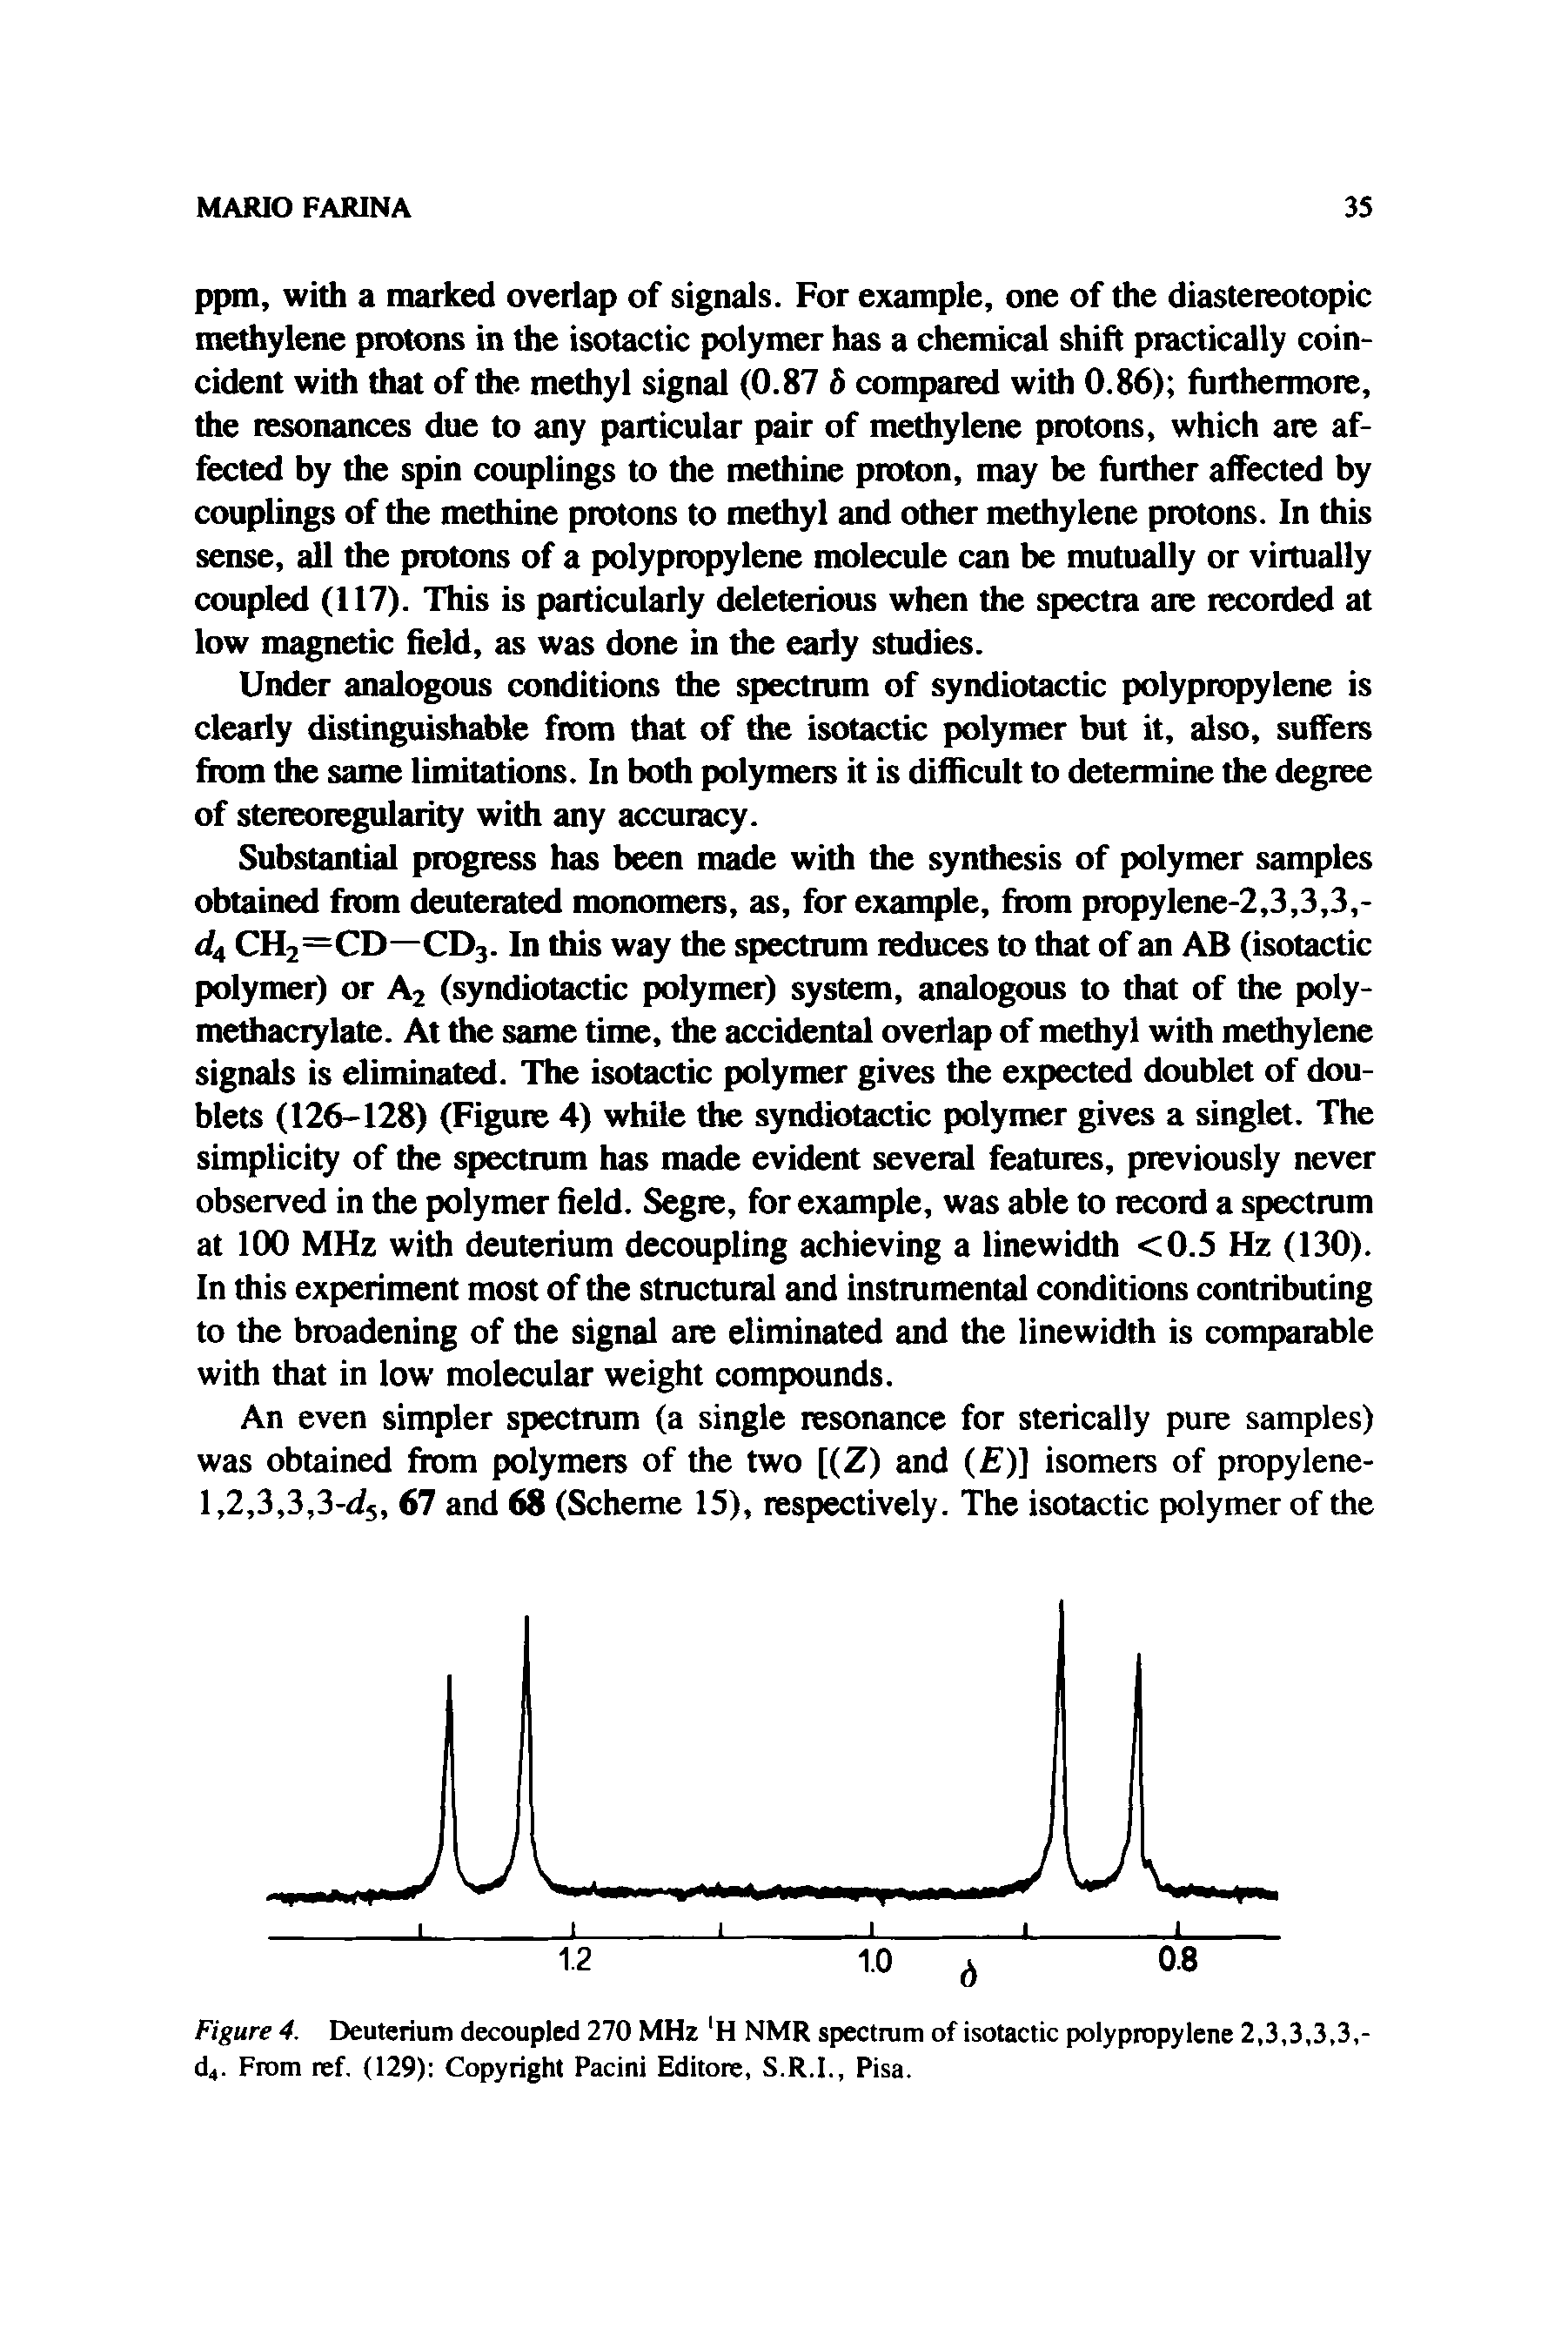 Figure 4. Deuterium decoupled 270 MHz H NMR spectram of isotactic polypropylene 2,3,3,3,3, d4- From ref, (129) Copyright Pacini Editore, S.R.I., Pisa.